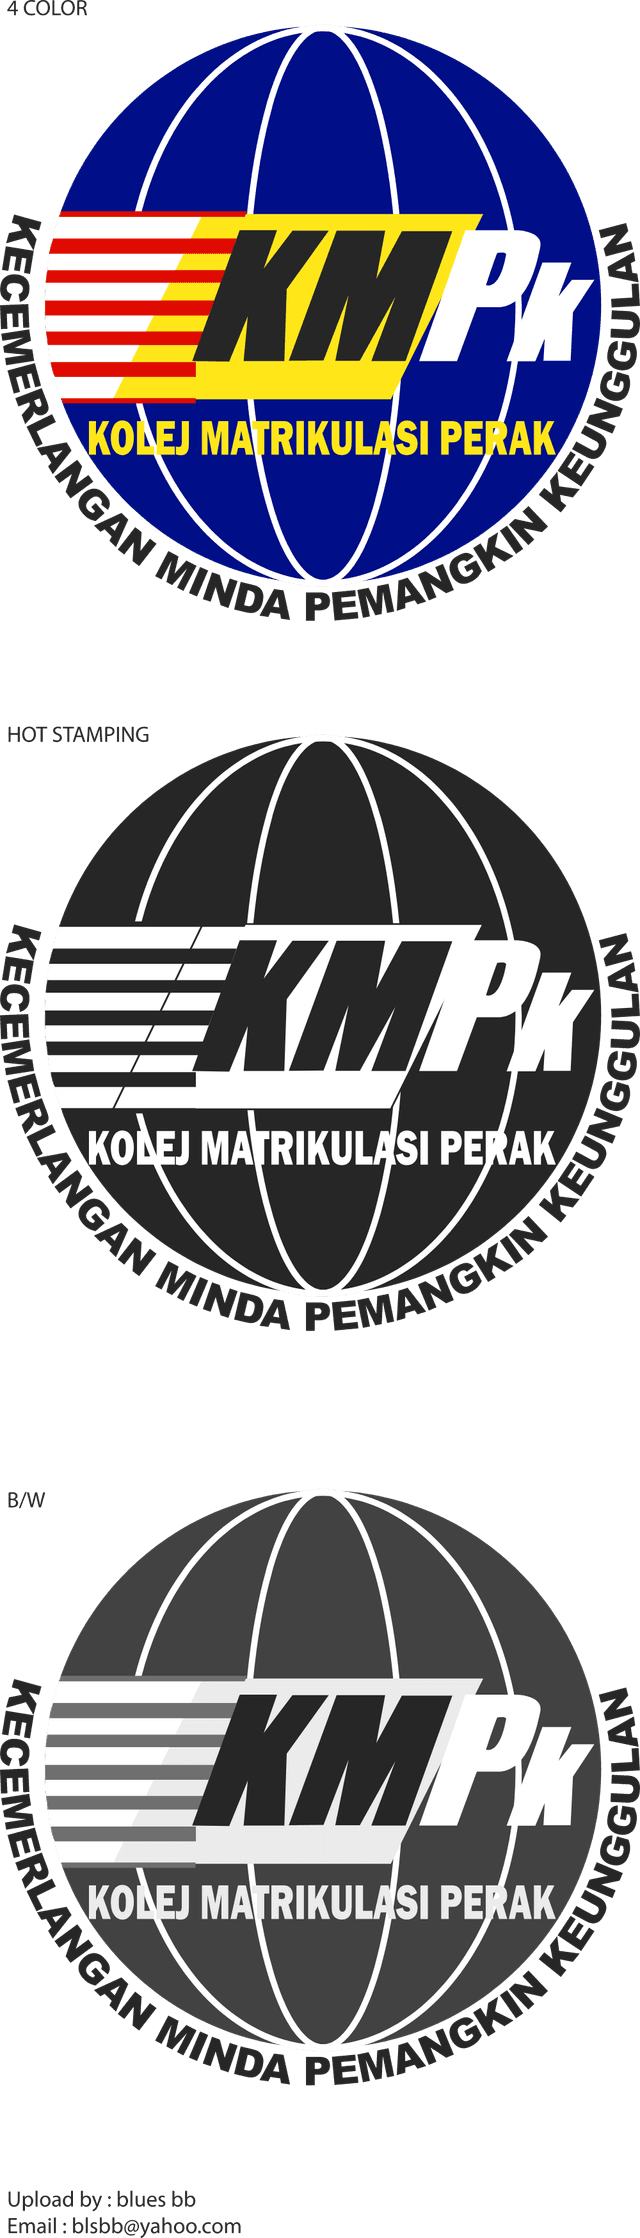 KMPk Logo download